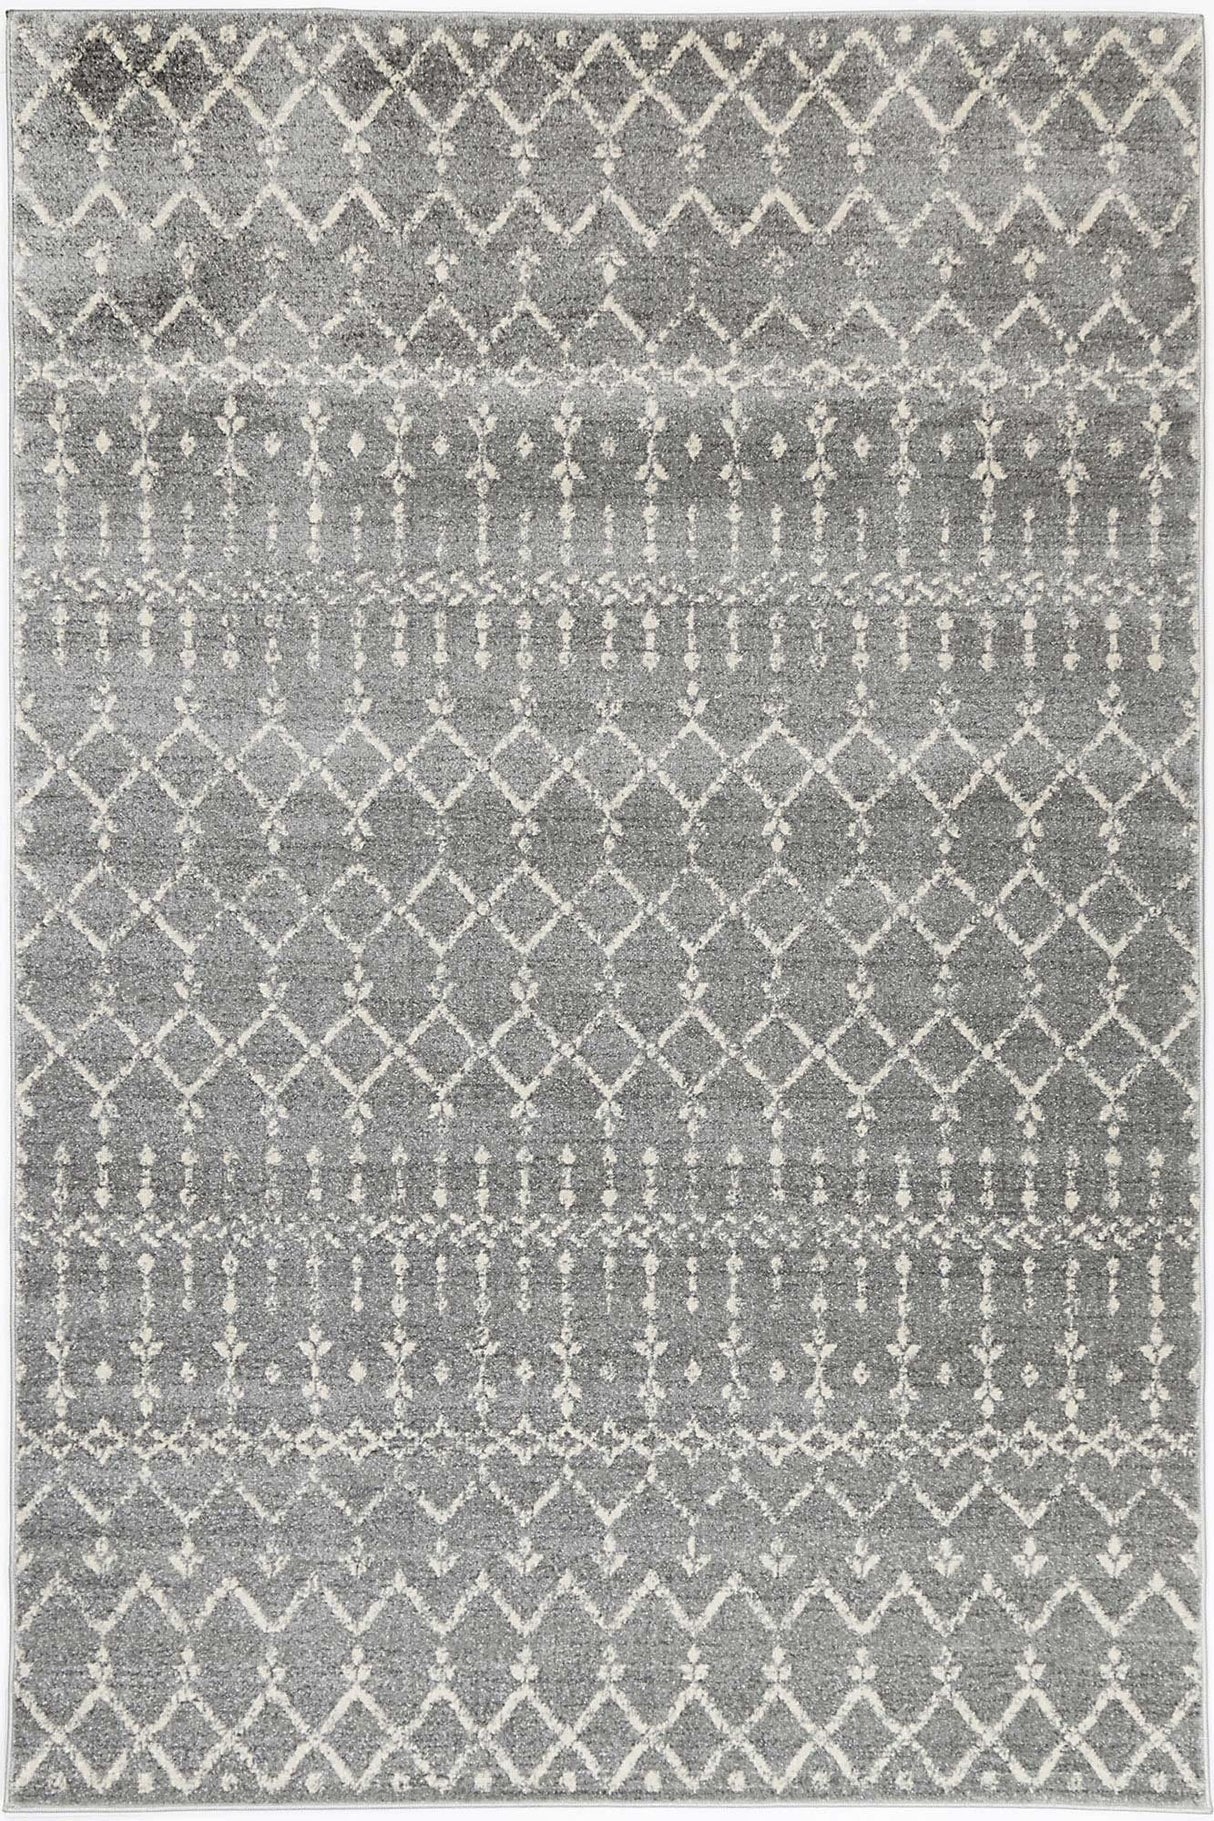 delicate-Ember-grey-ivory-rug